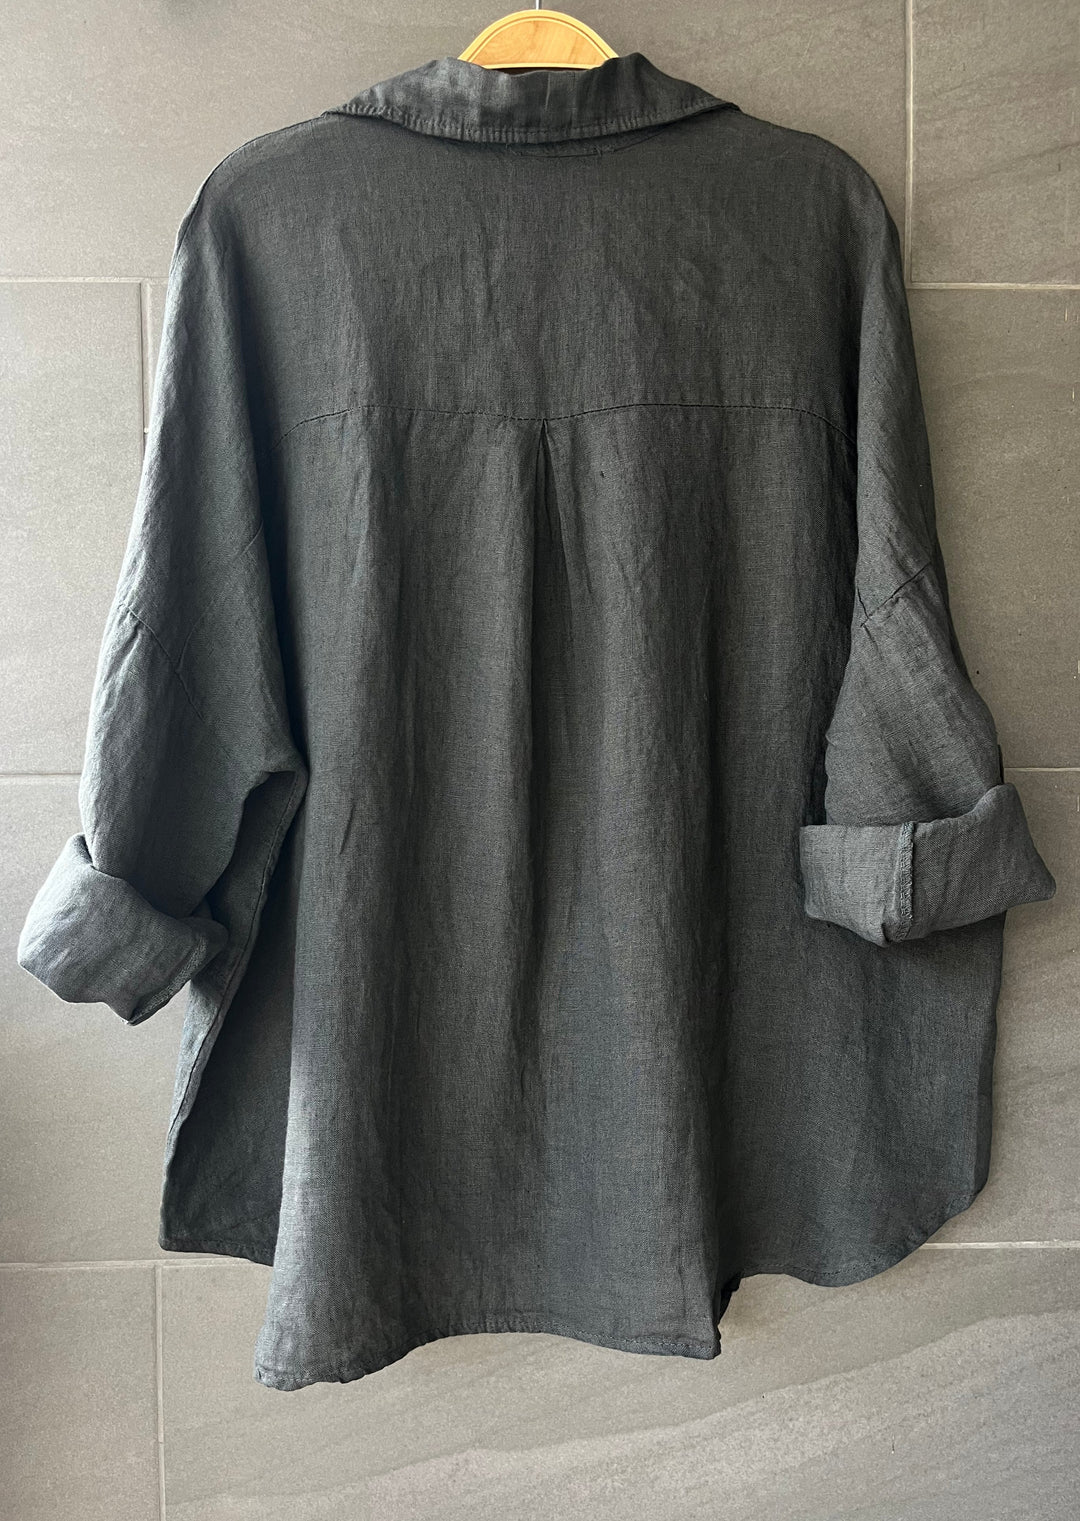 Meo Linen Rome Button Down Shirt (Charcoal)